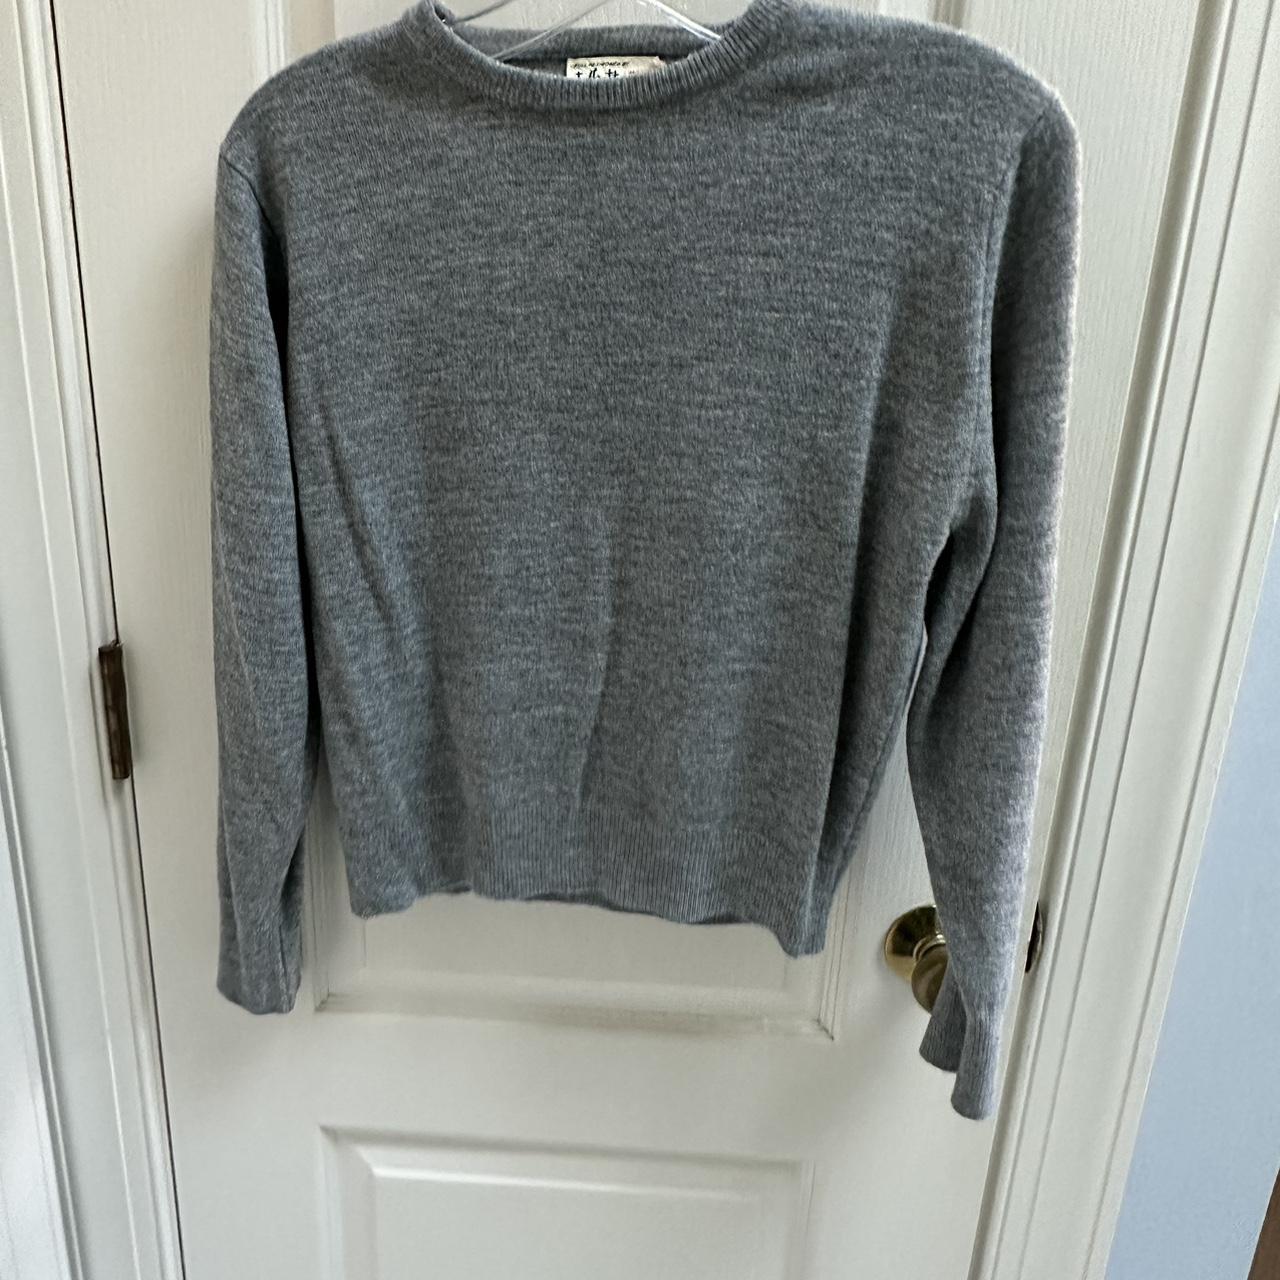 Vintage Talbott acrylic sweater. This has a shorter... - Depop